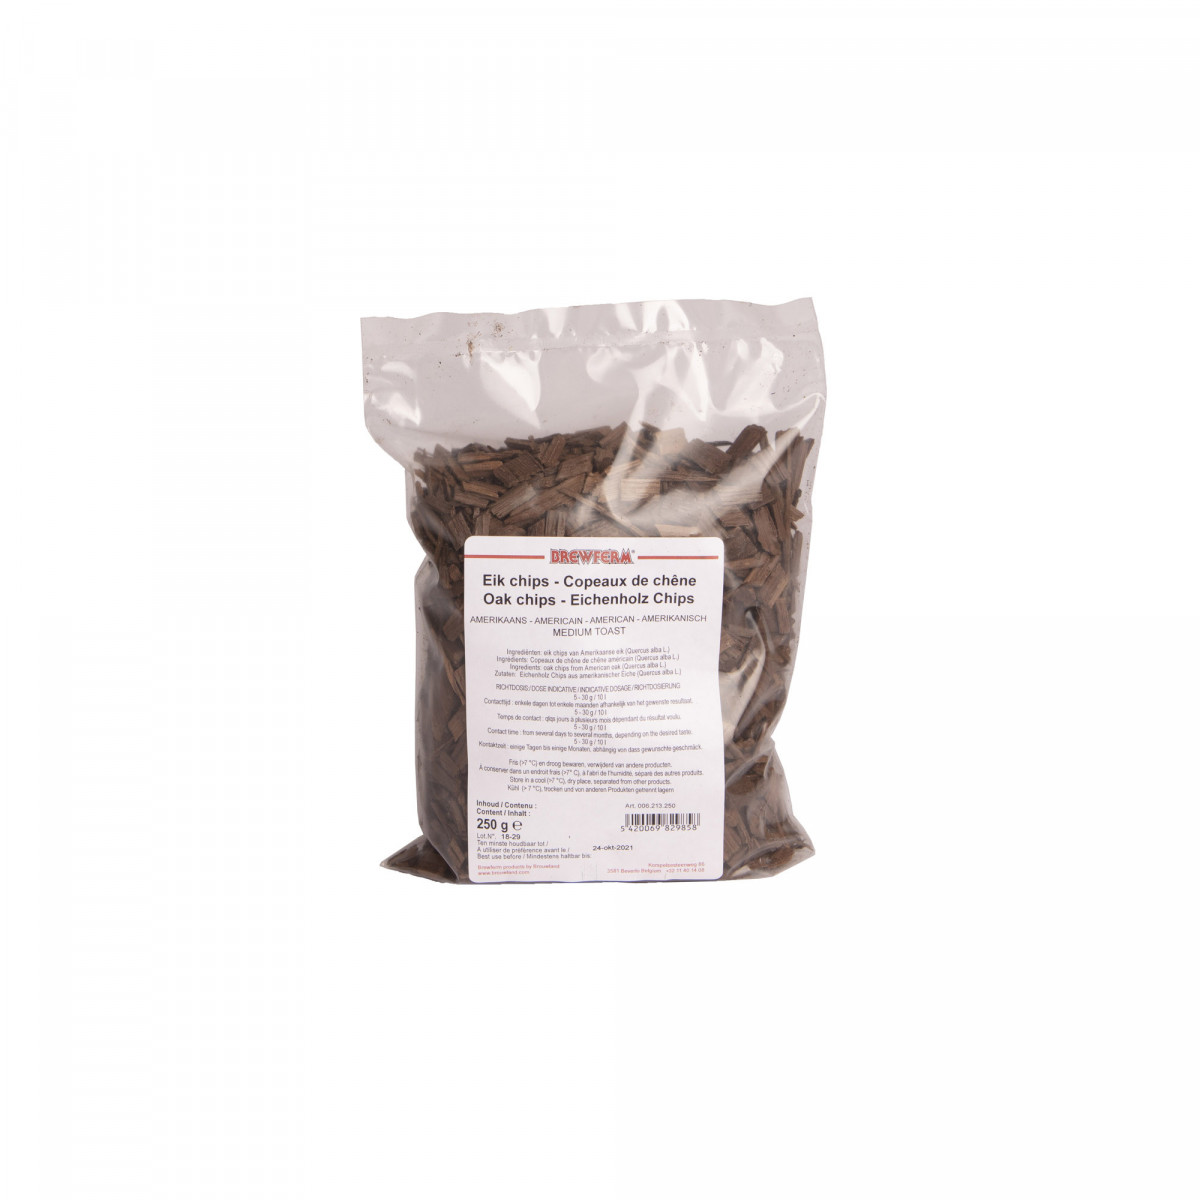 Brewferm oak chips American - medium toast 250 g